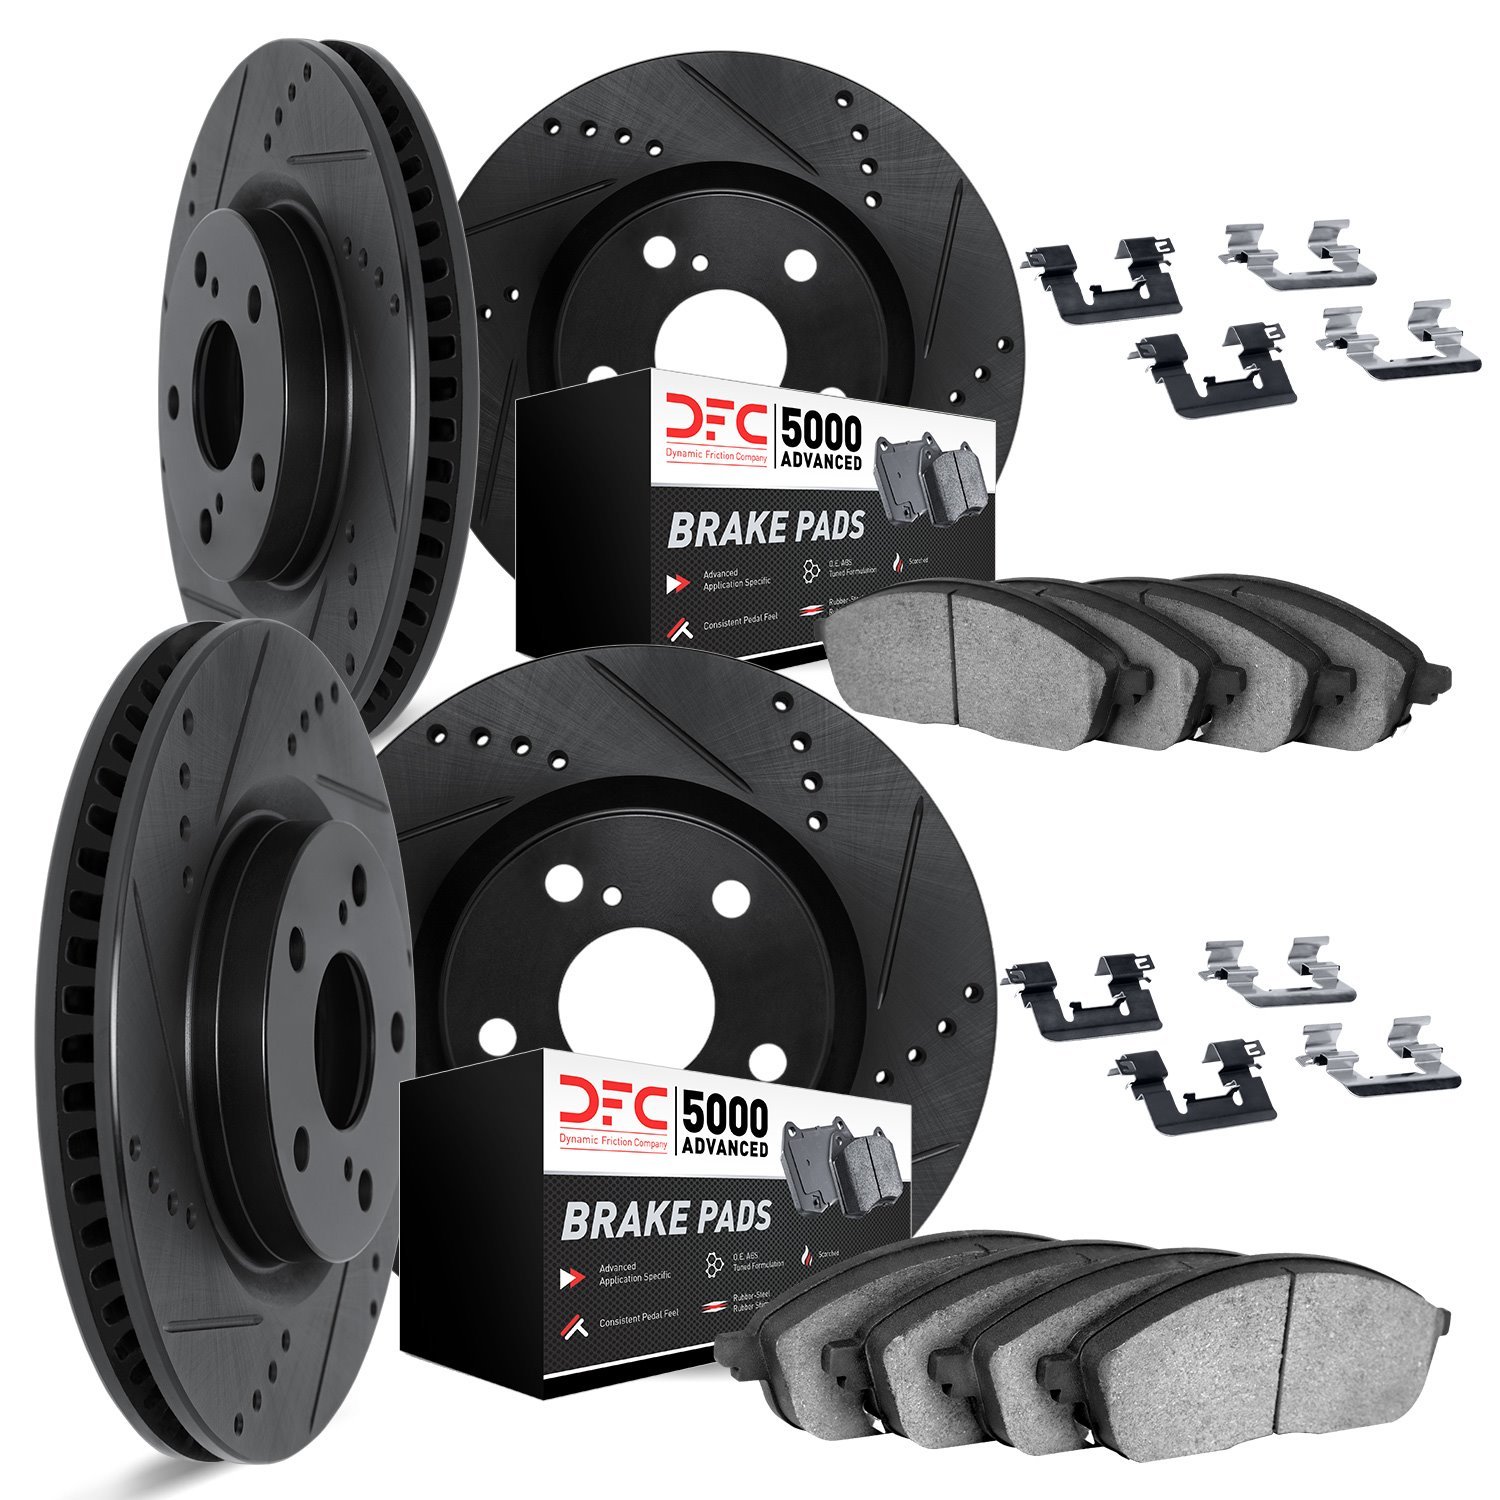 8514-40244 Drilled/Slotted Brake Rotors w/5000 Advanced Brake Pads Kit & Hardware [Black], 2006-2006 Mopar, Position: Front and